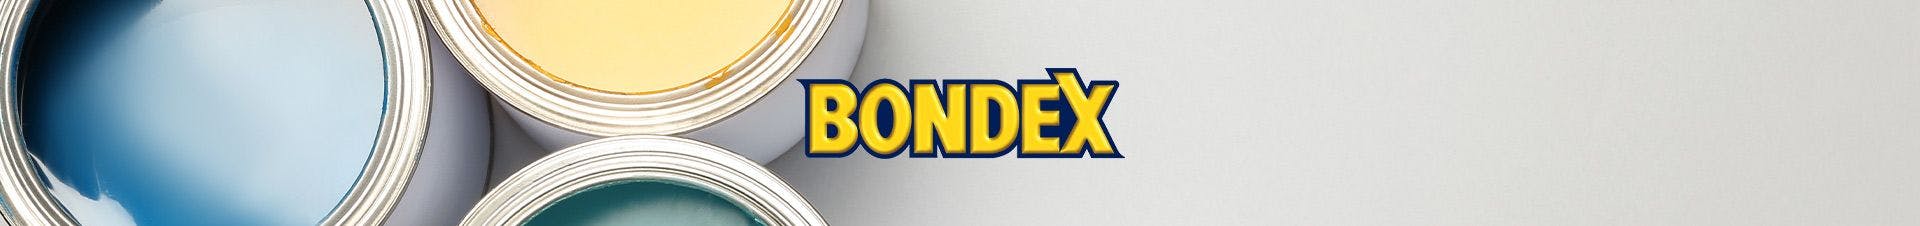 Quiz: Recomendador de Produtos - Bondex